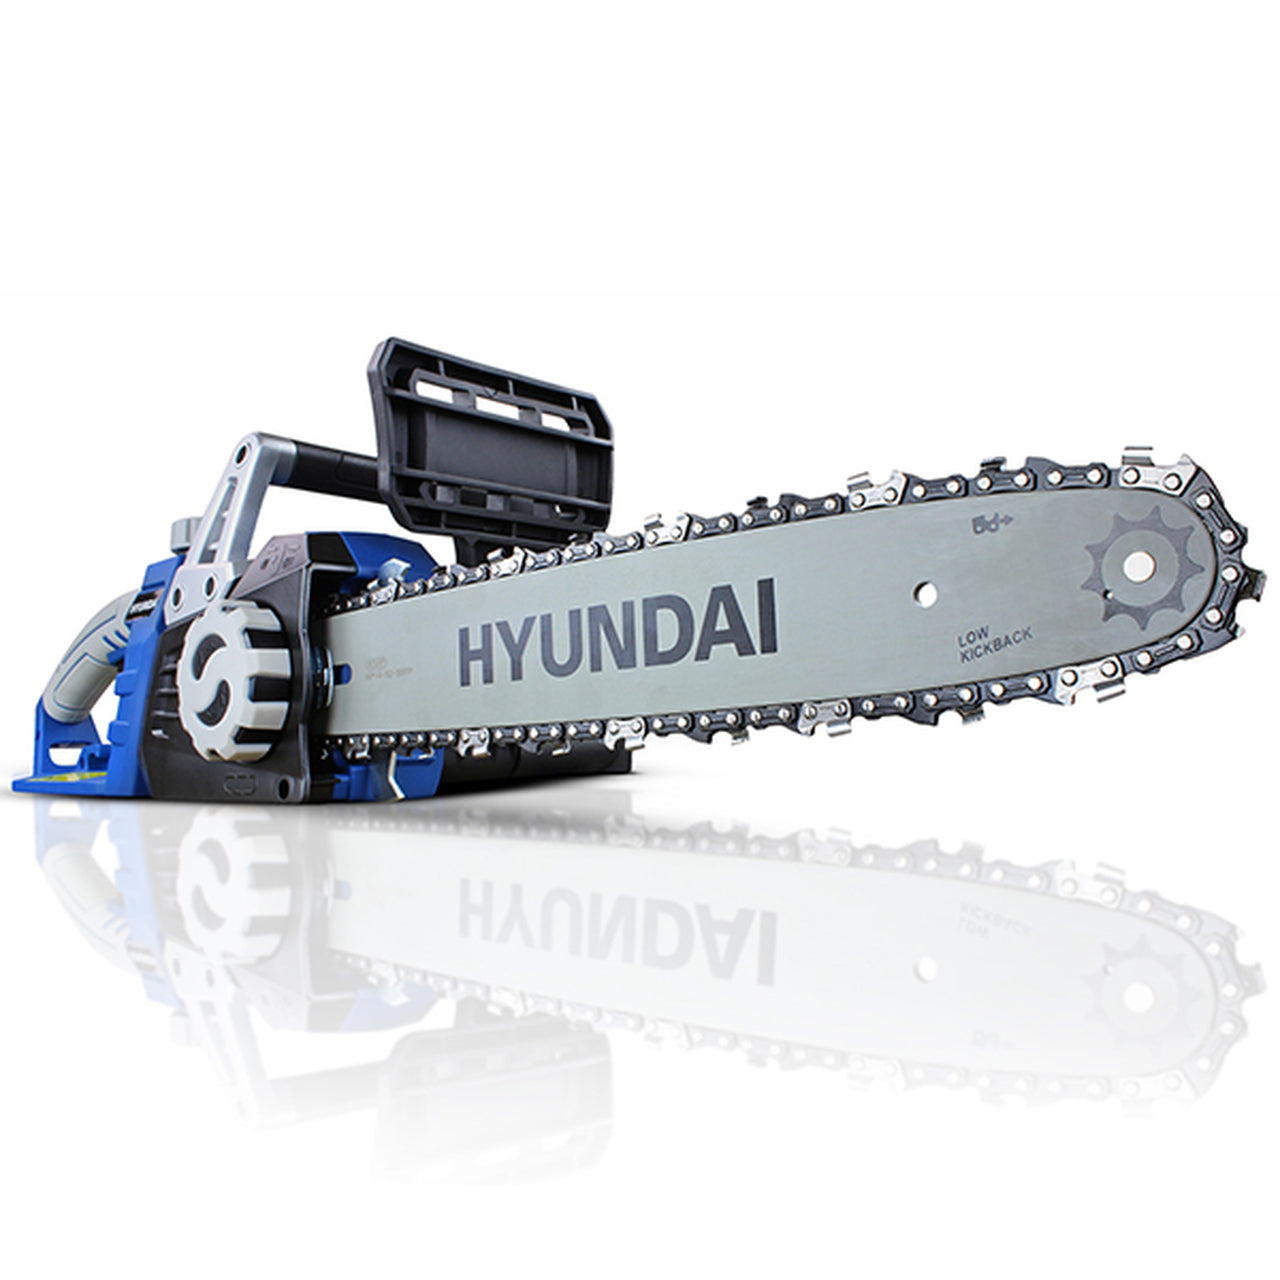 Hyundai-HYC1600E--14"-Bar-Electric-Chainsaw